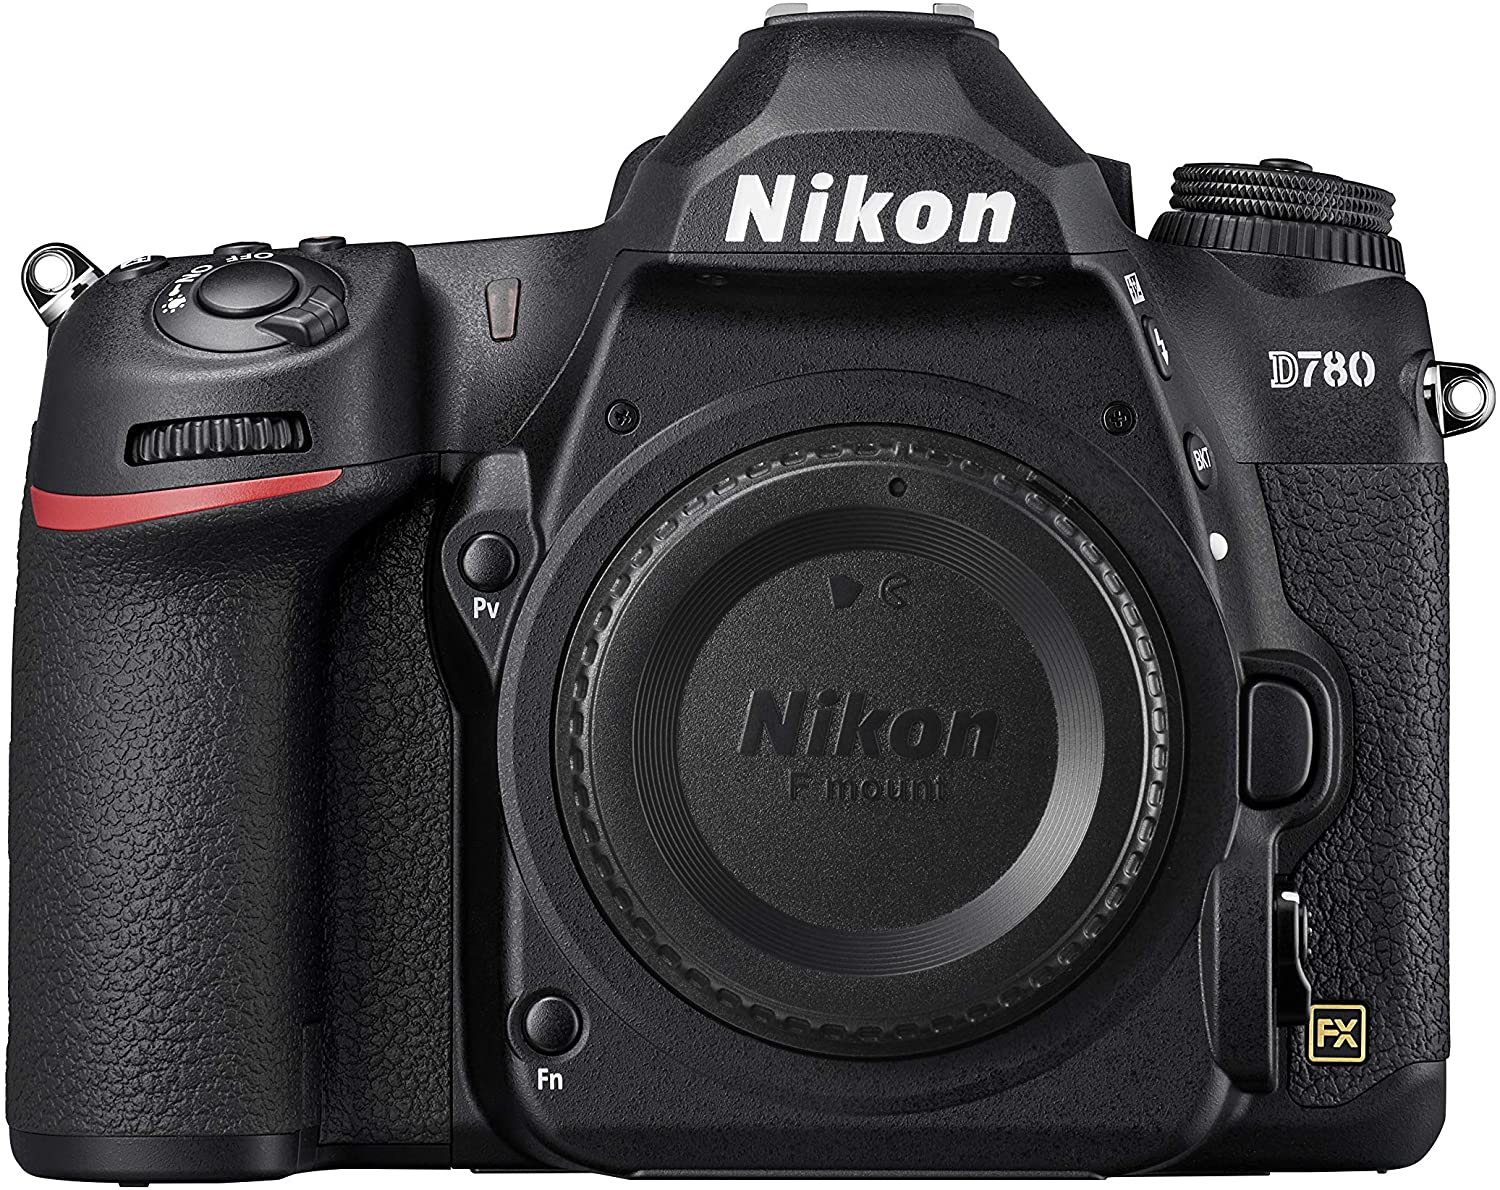 Product Image of Nikon D780 Digital DSLR Camera Body Only